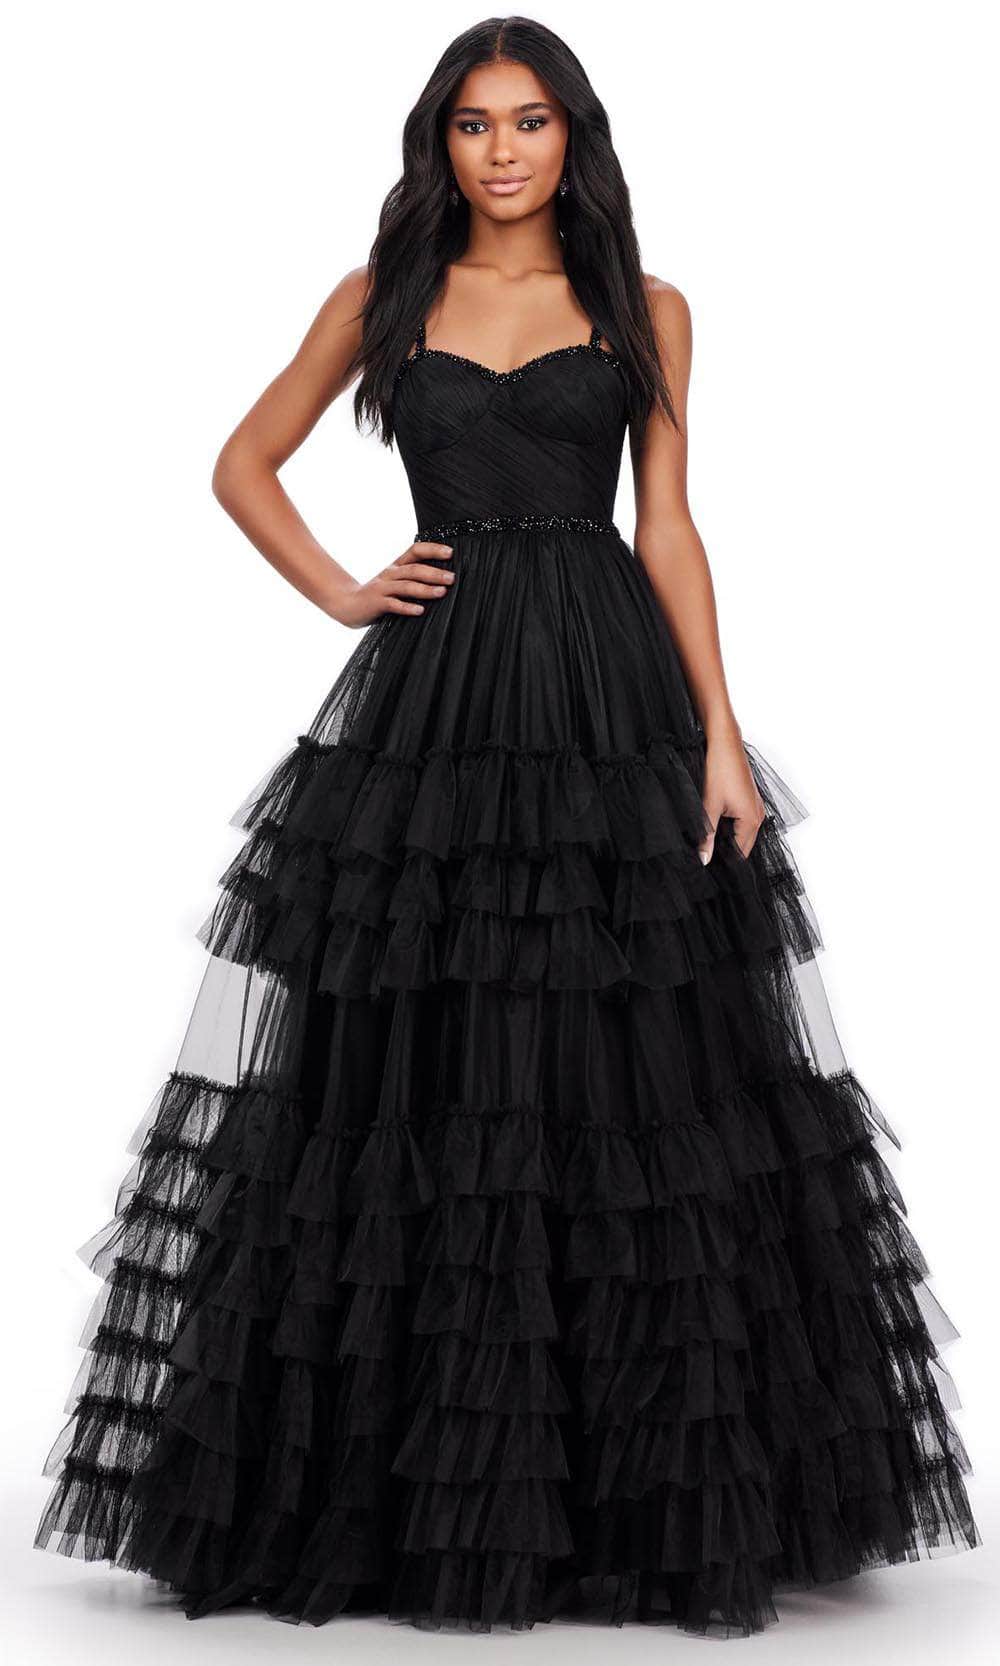 Image of Ashley Lauren 11603 - Ruffled A-Line Prom Dress